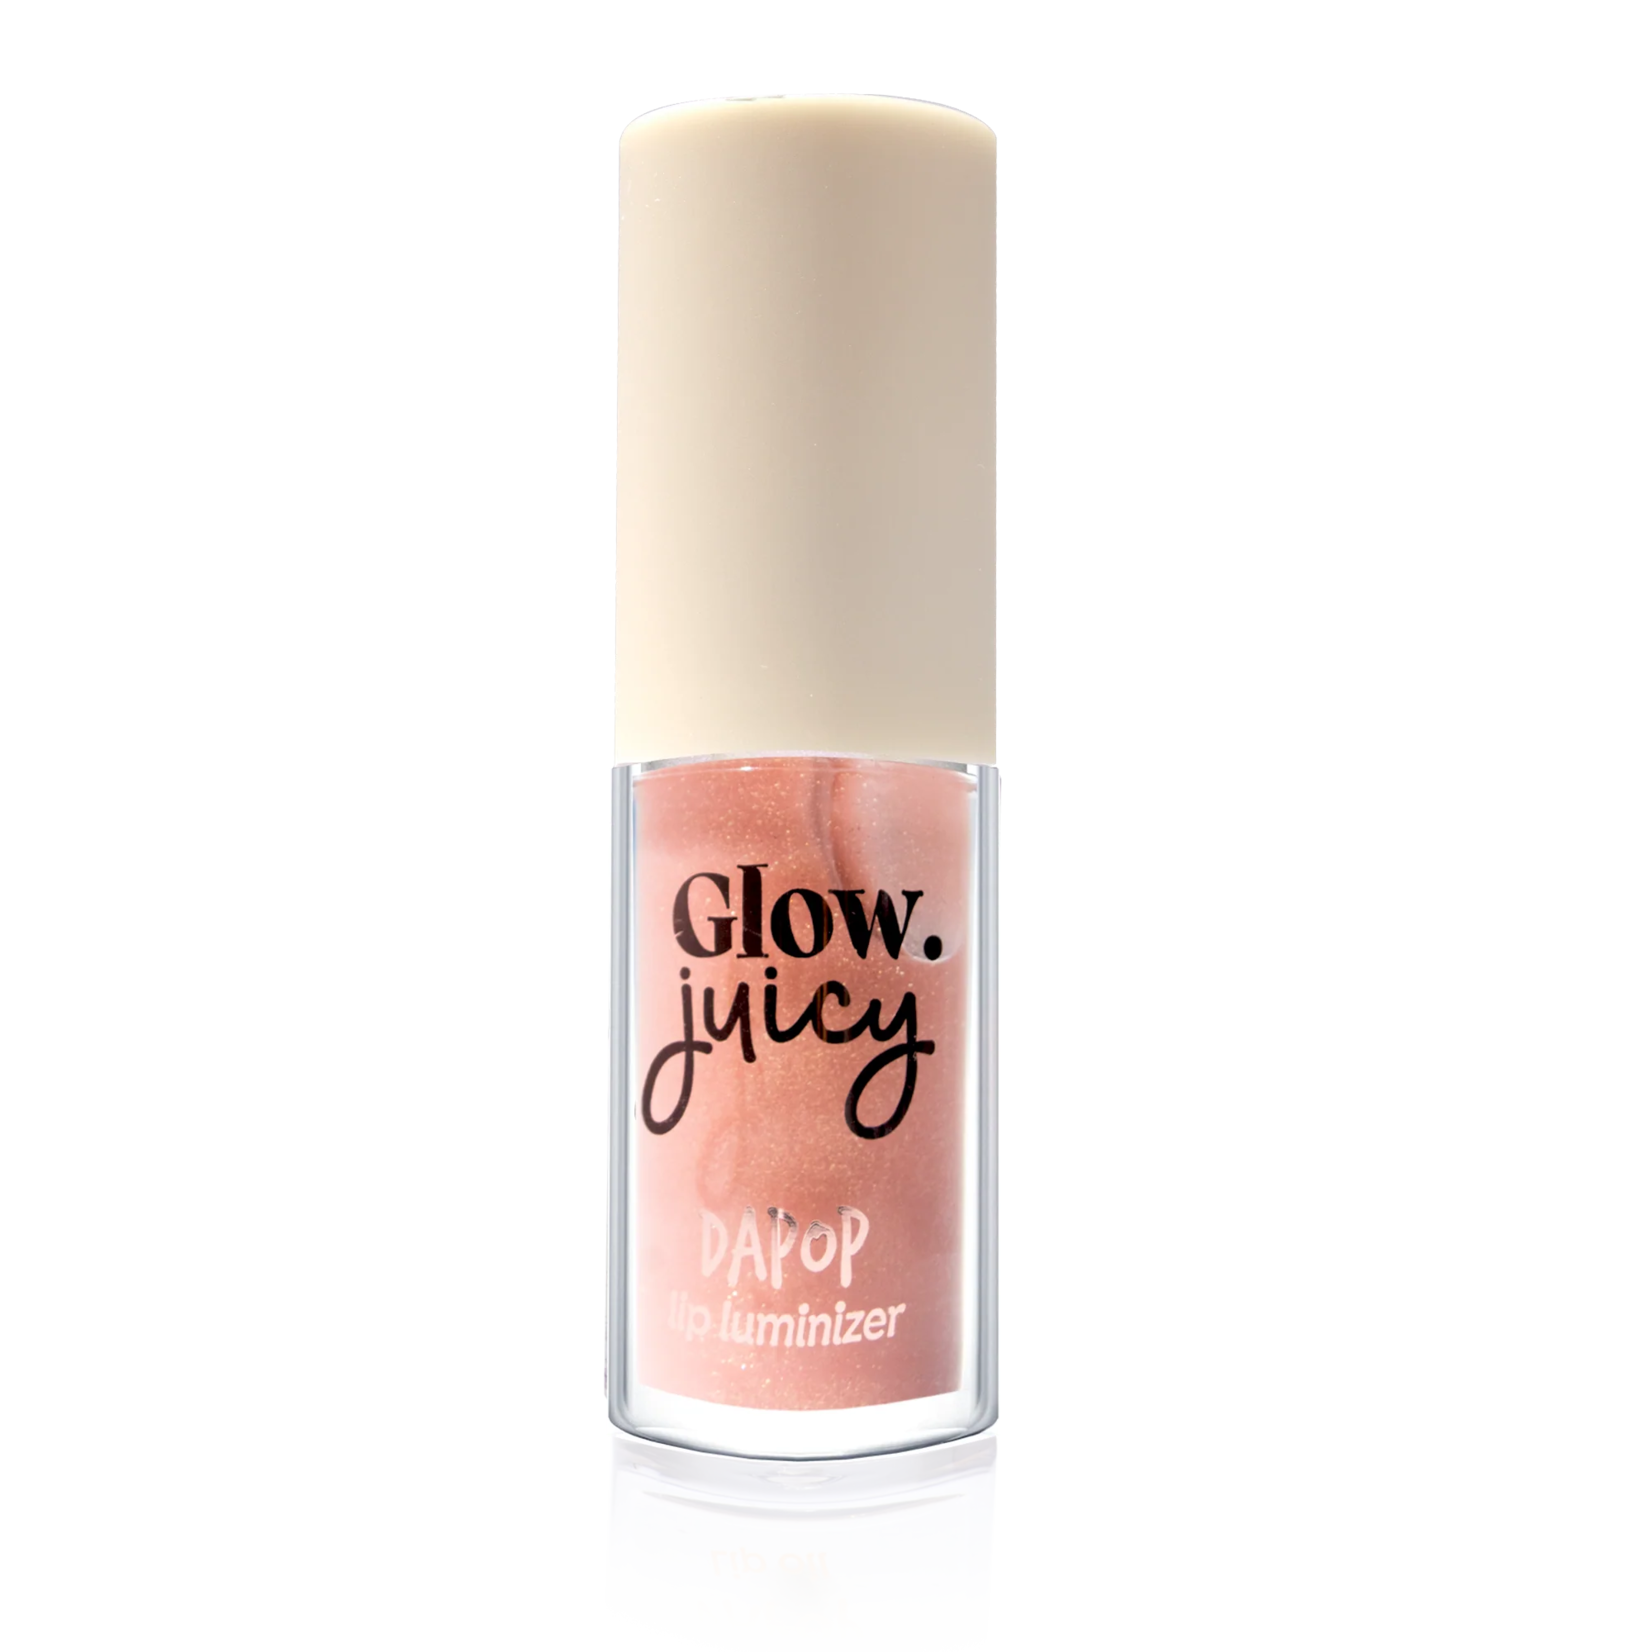 DAPOP Lipgloss Dapop Glow juicy 03 Nude